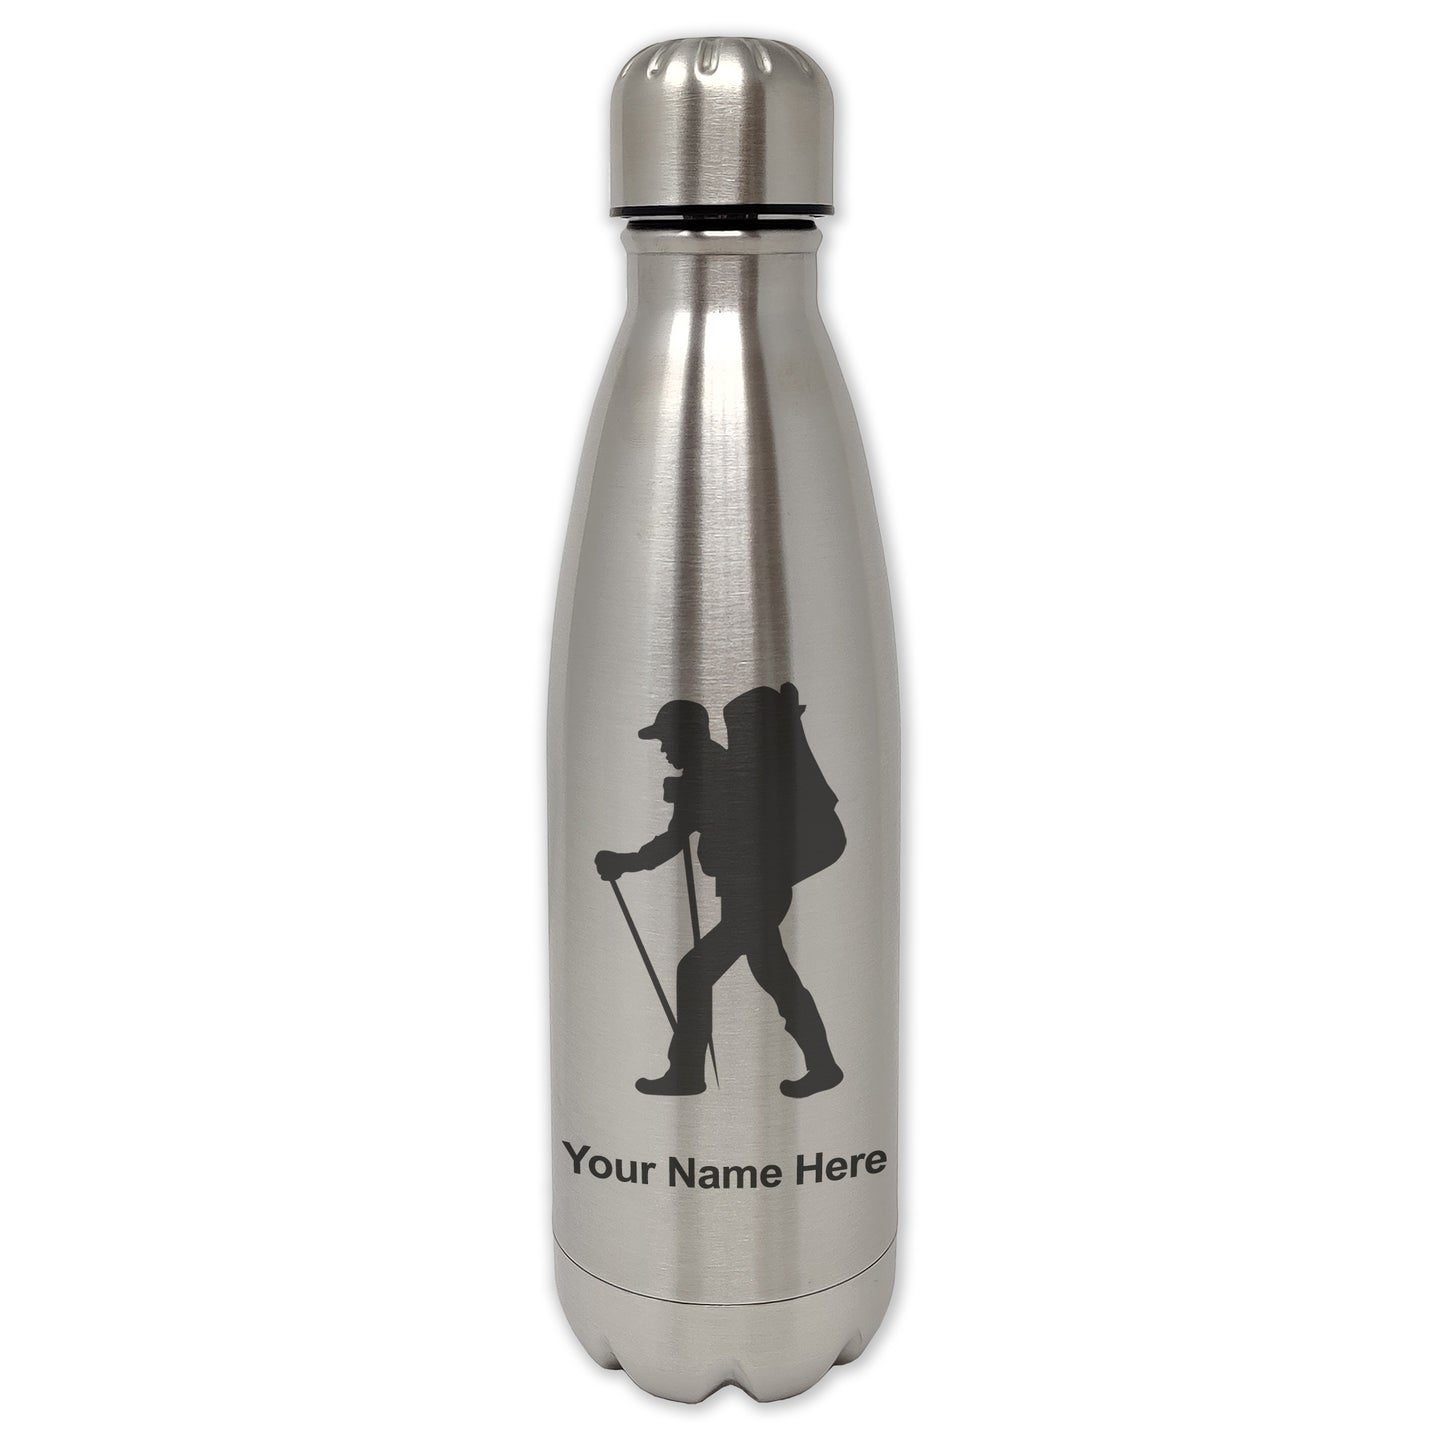 LaserGram Single Wall Water Bottle, Hiker Man, Personalized Engraving Included